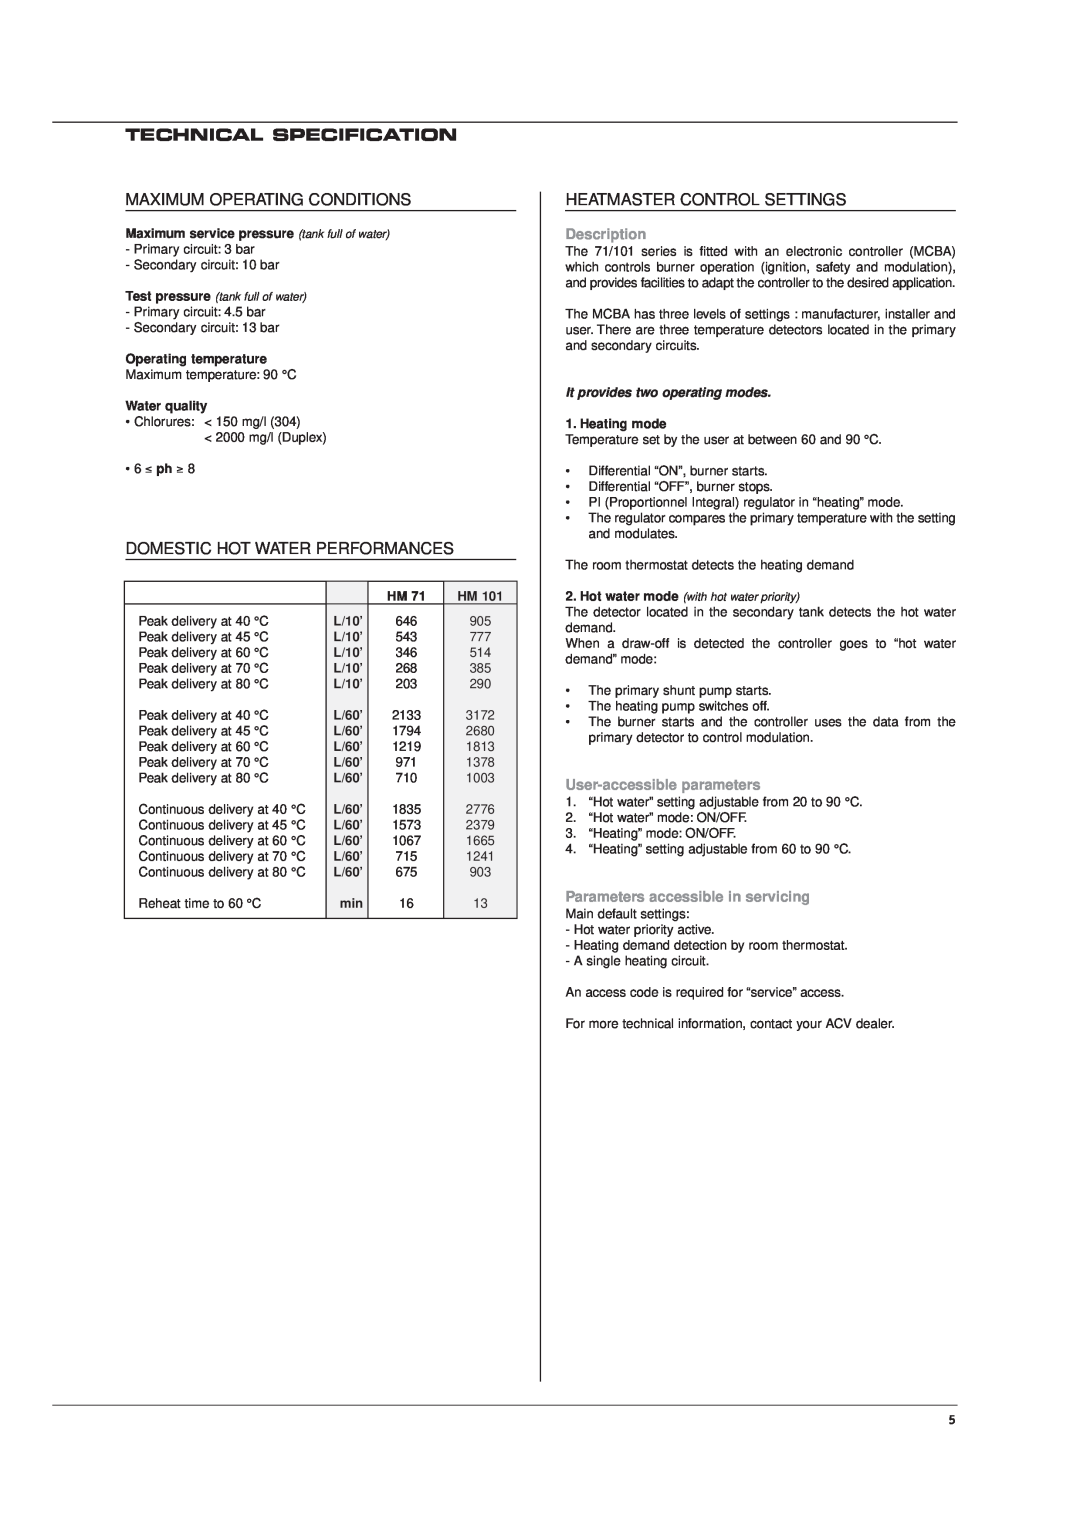 Casablanca Fan Company HM 101, HM 71 manual Technical Specification, Description, User-accessible parameters, 6 ≤ ph ≥ 